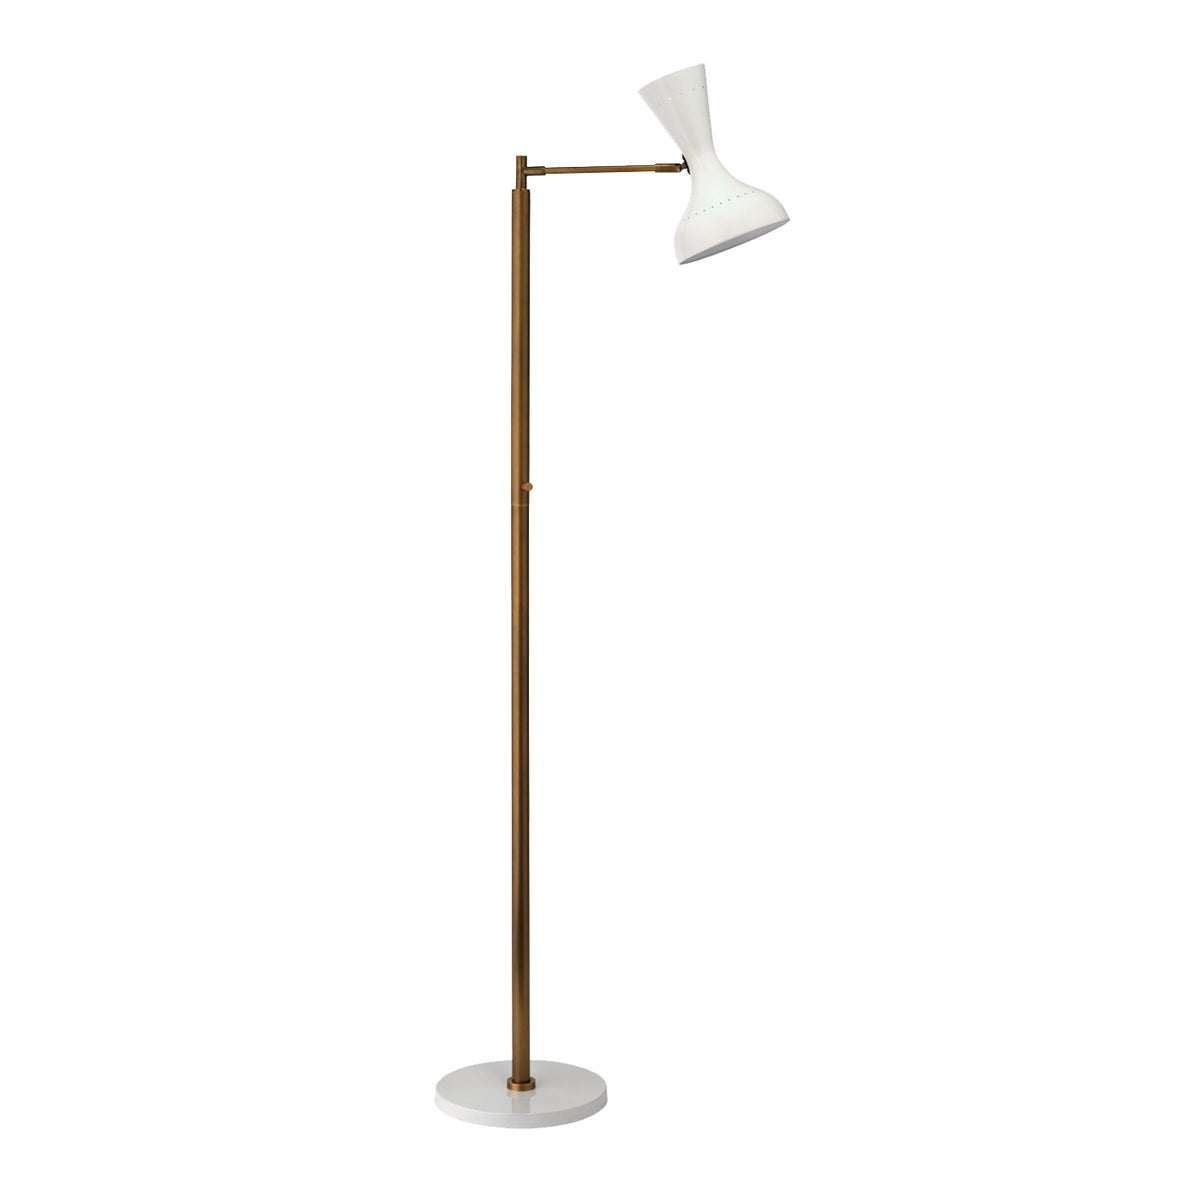 Pisa Swing Arm Floor Lamp, White with Antique Brass